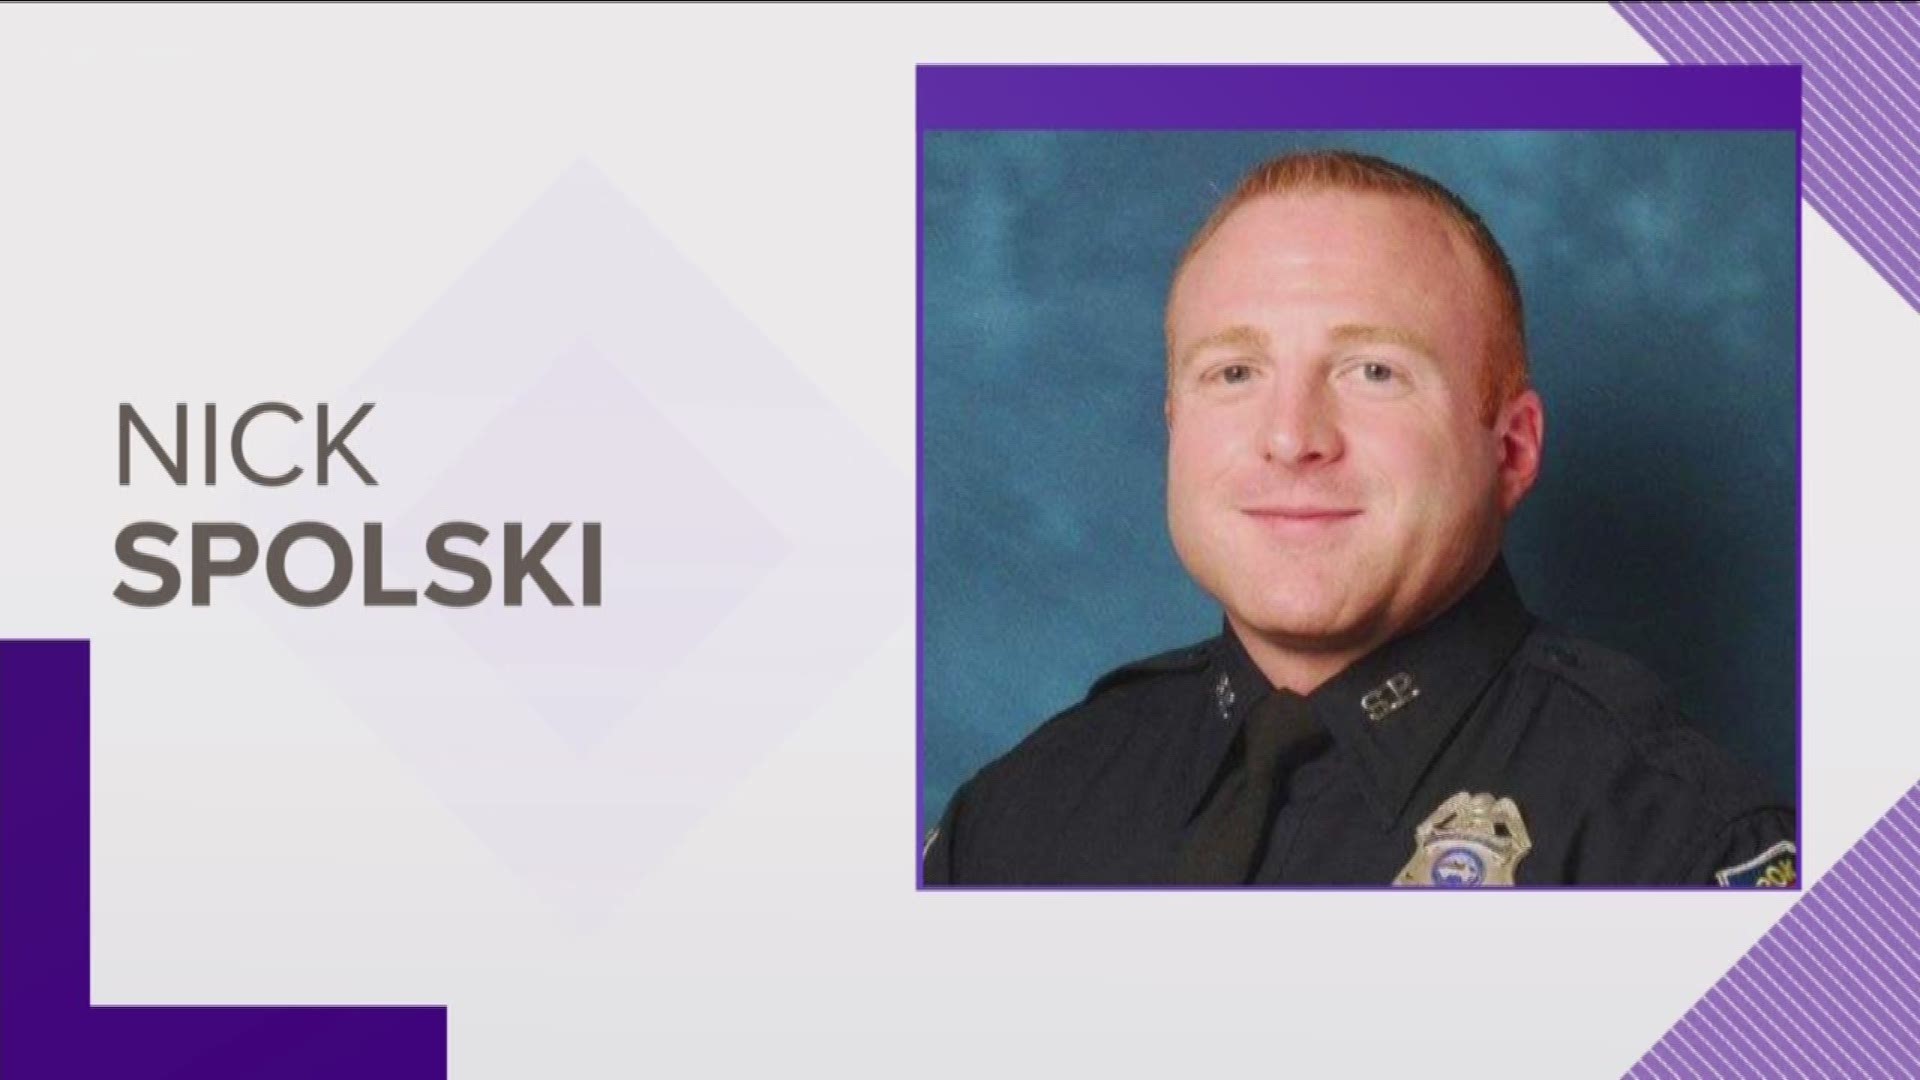 The Spokane Police Department found Officer Nick Spolski violated department policies.